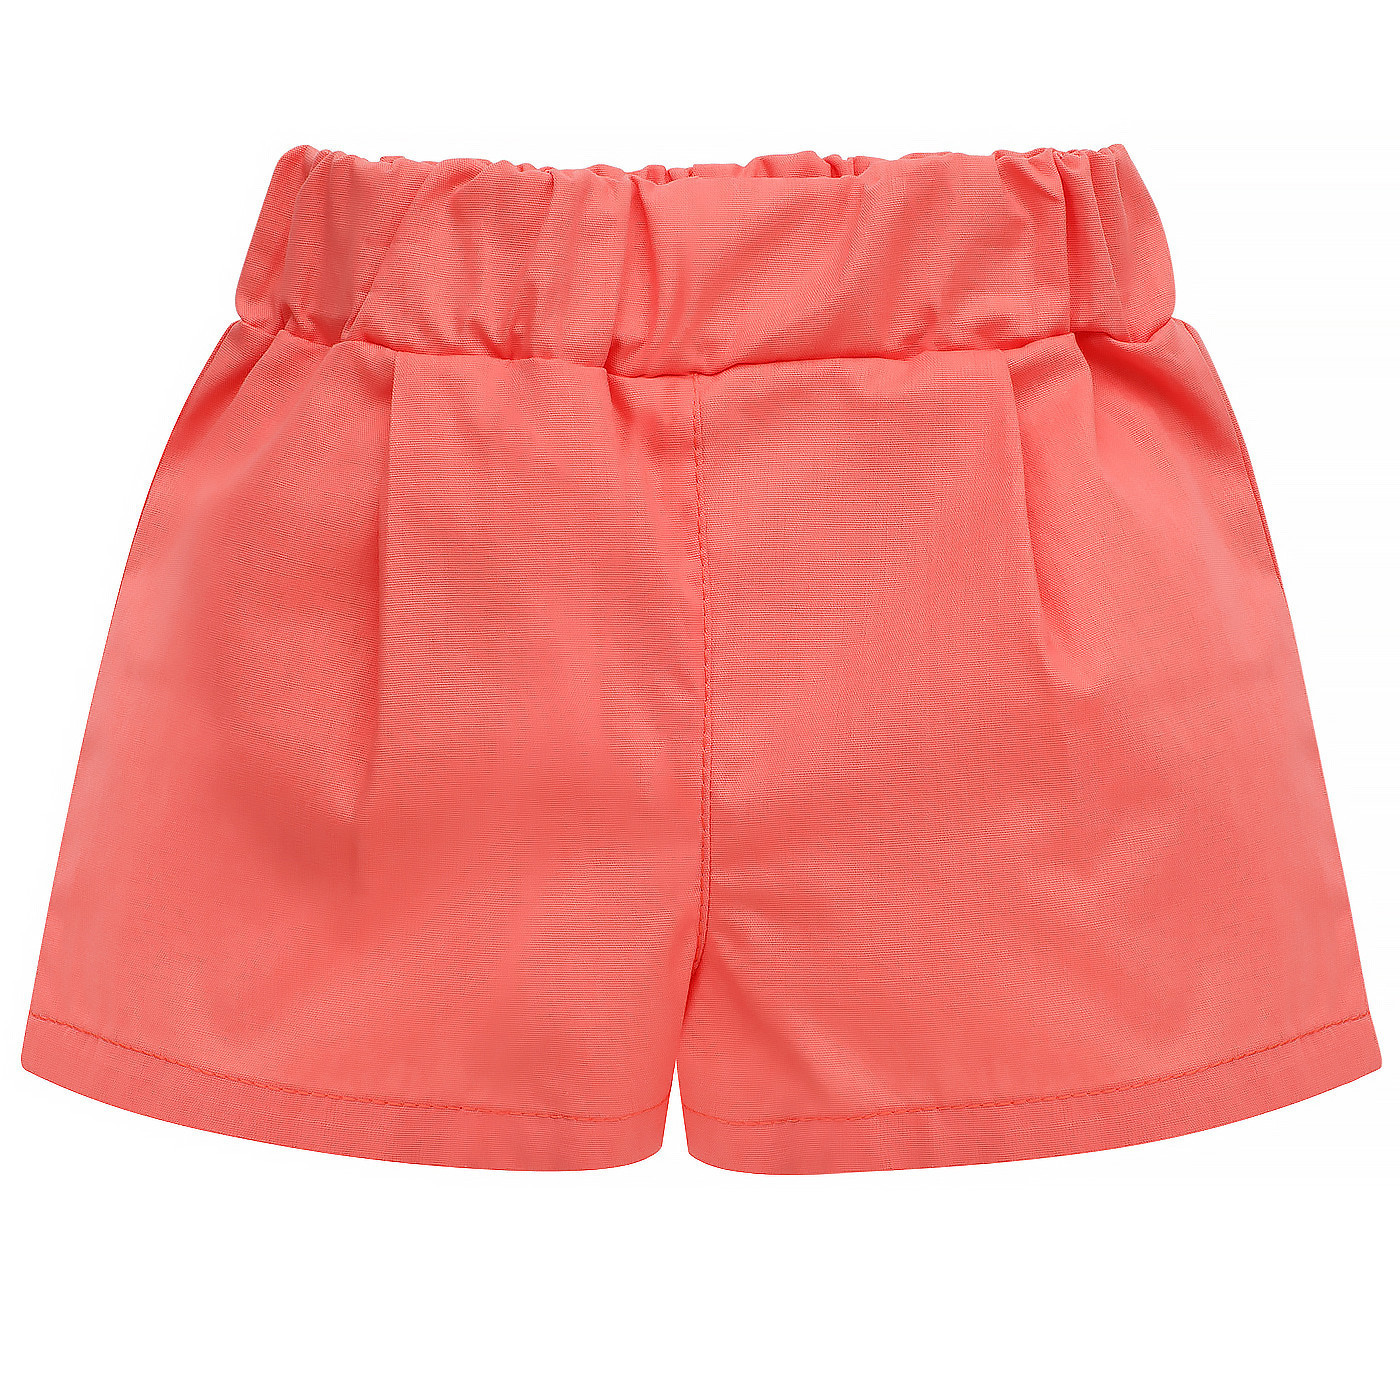 Pinokio Kids's Summer Garden Shorts